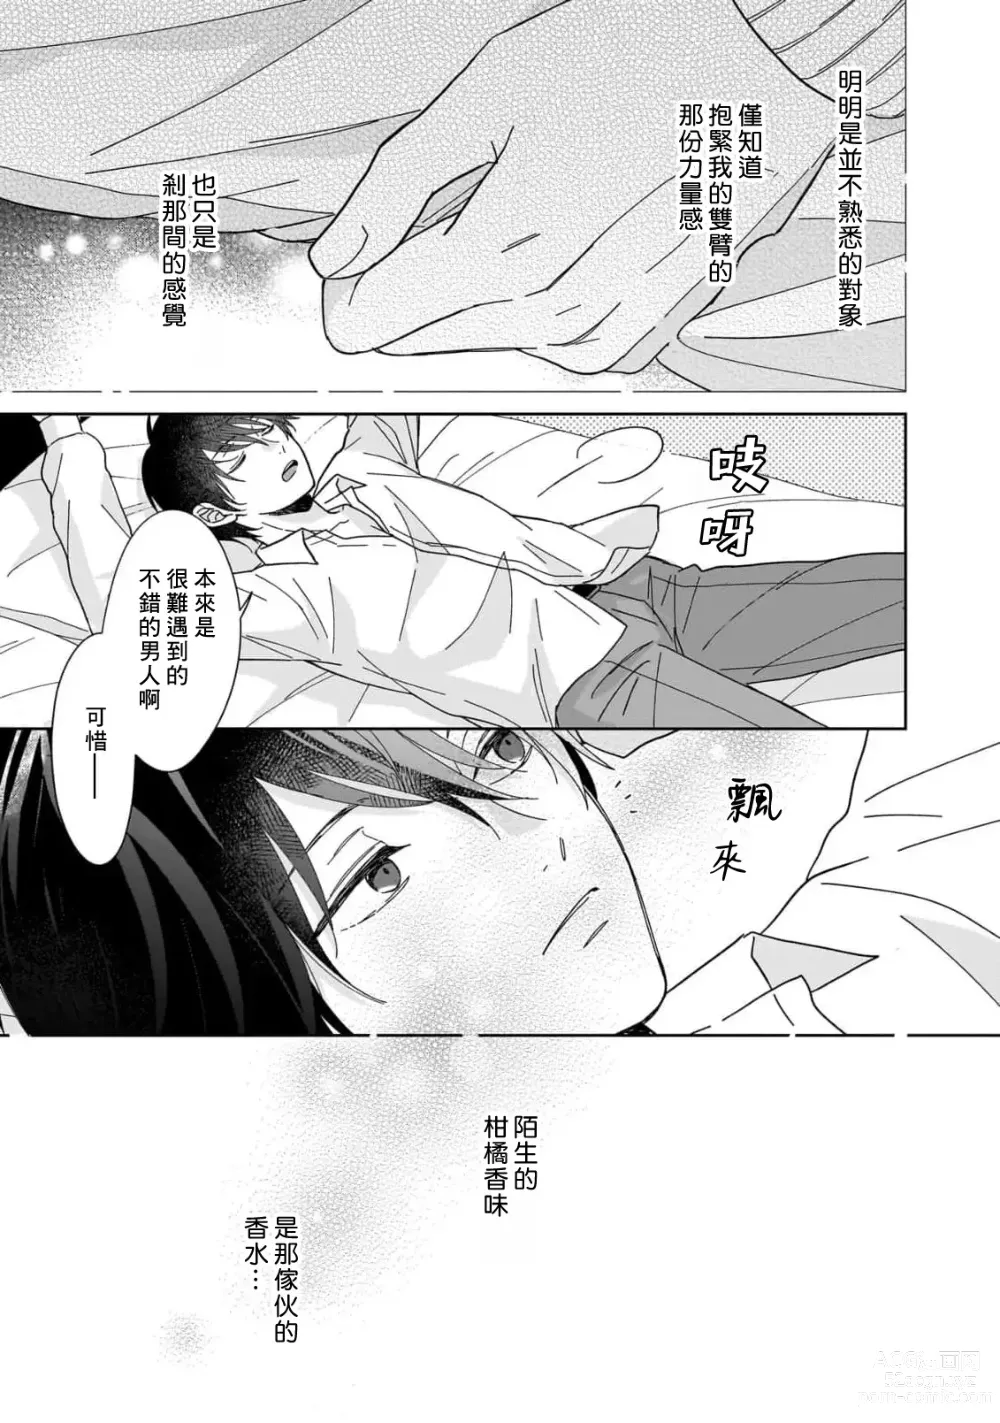 Page 33 of manga 下雨天有些许忧郁 1